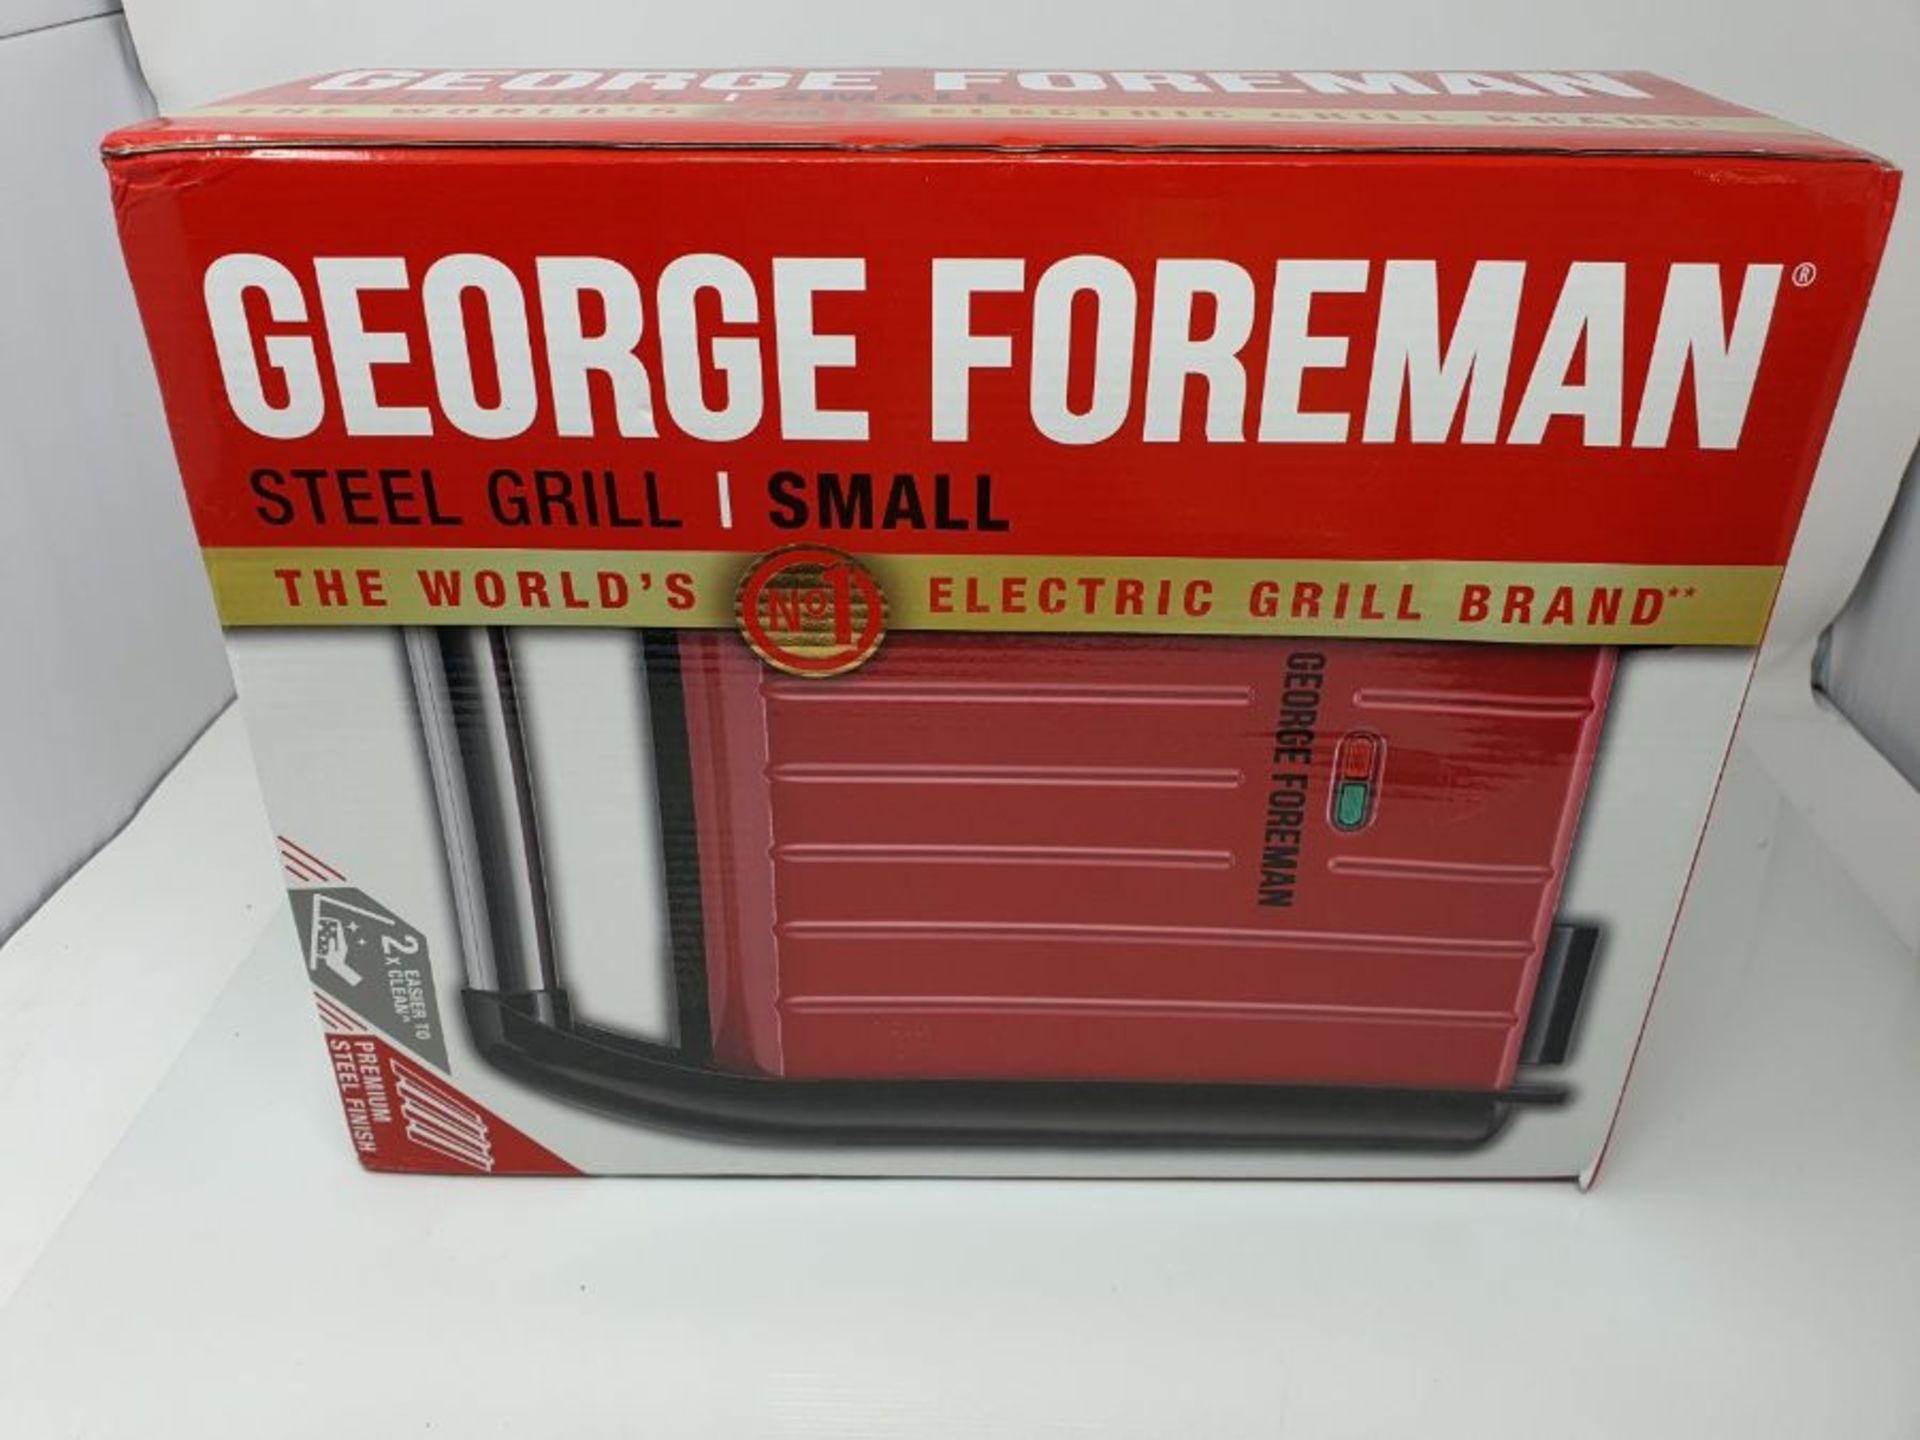 George Foreman 25030-56 Fitnessgrill Steel Compact, Kontaktgrill, Panini- und Sandwich